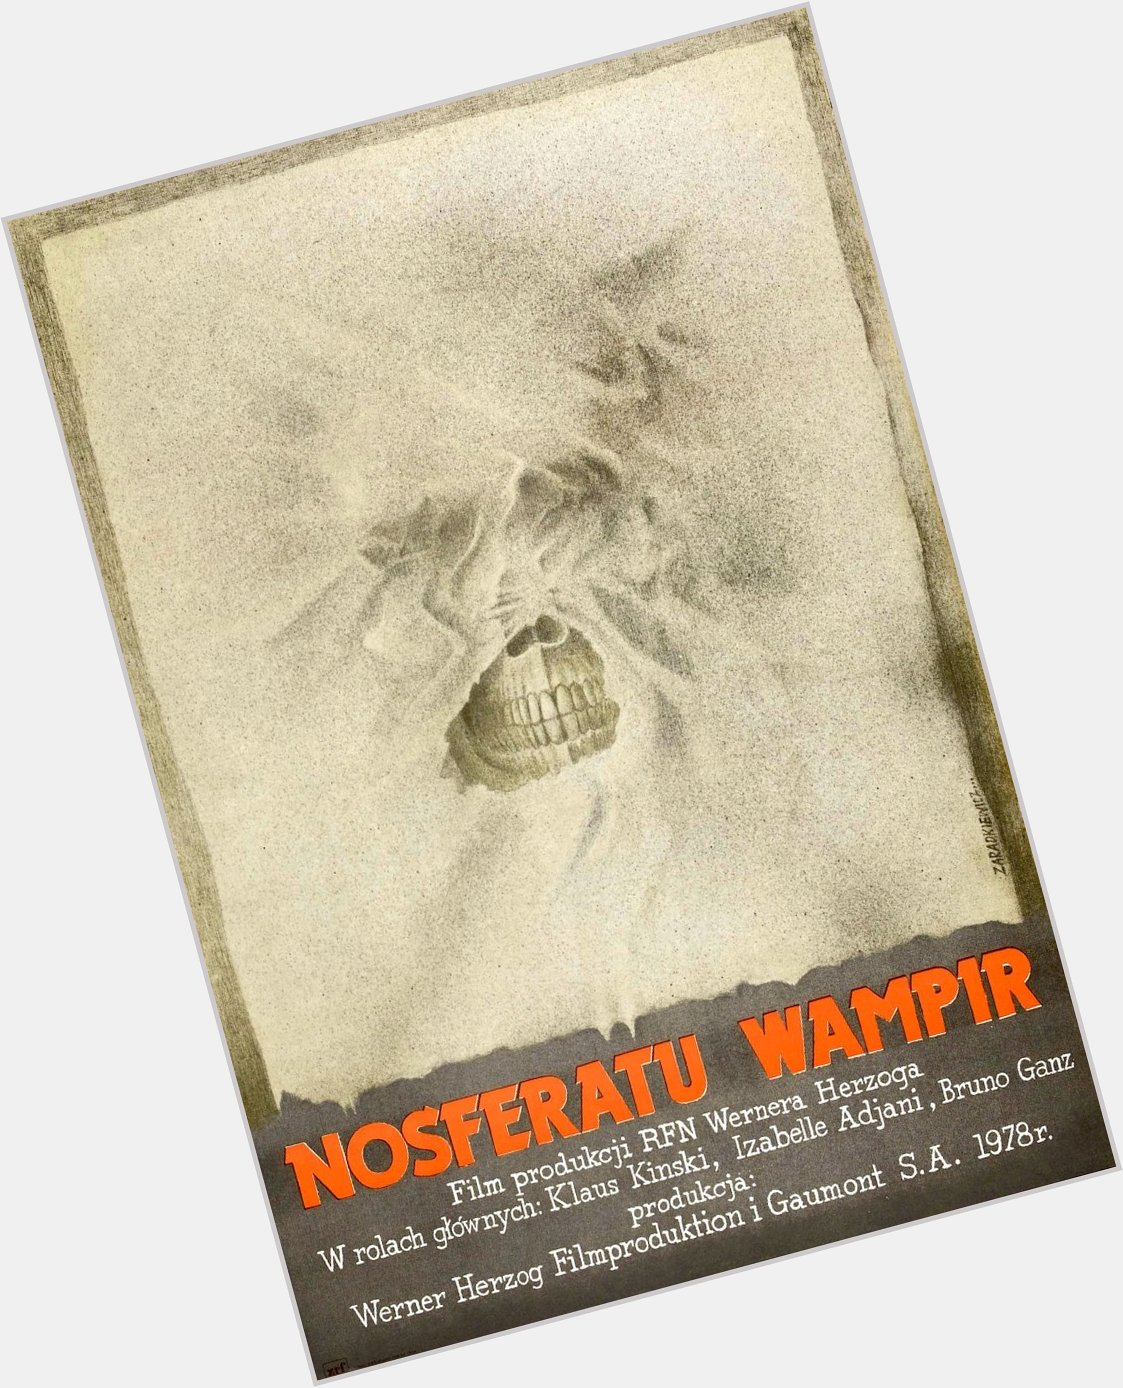 Happy birthday to Werner Herzog - NOSFERATU THE VAMPYRE - 1979 - Polish release poster 